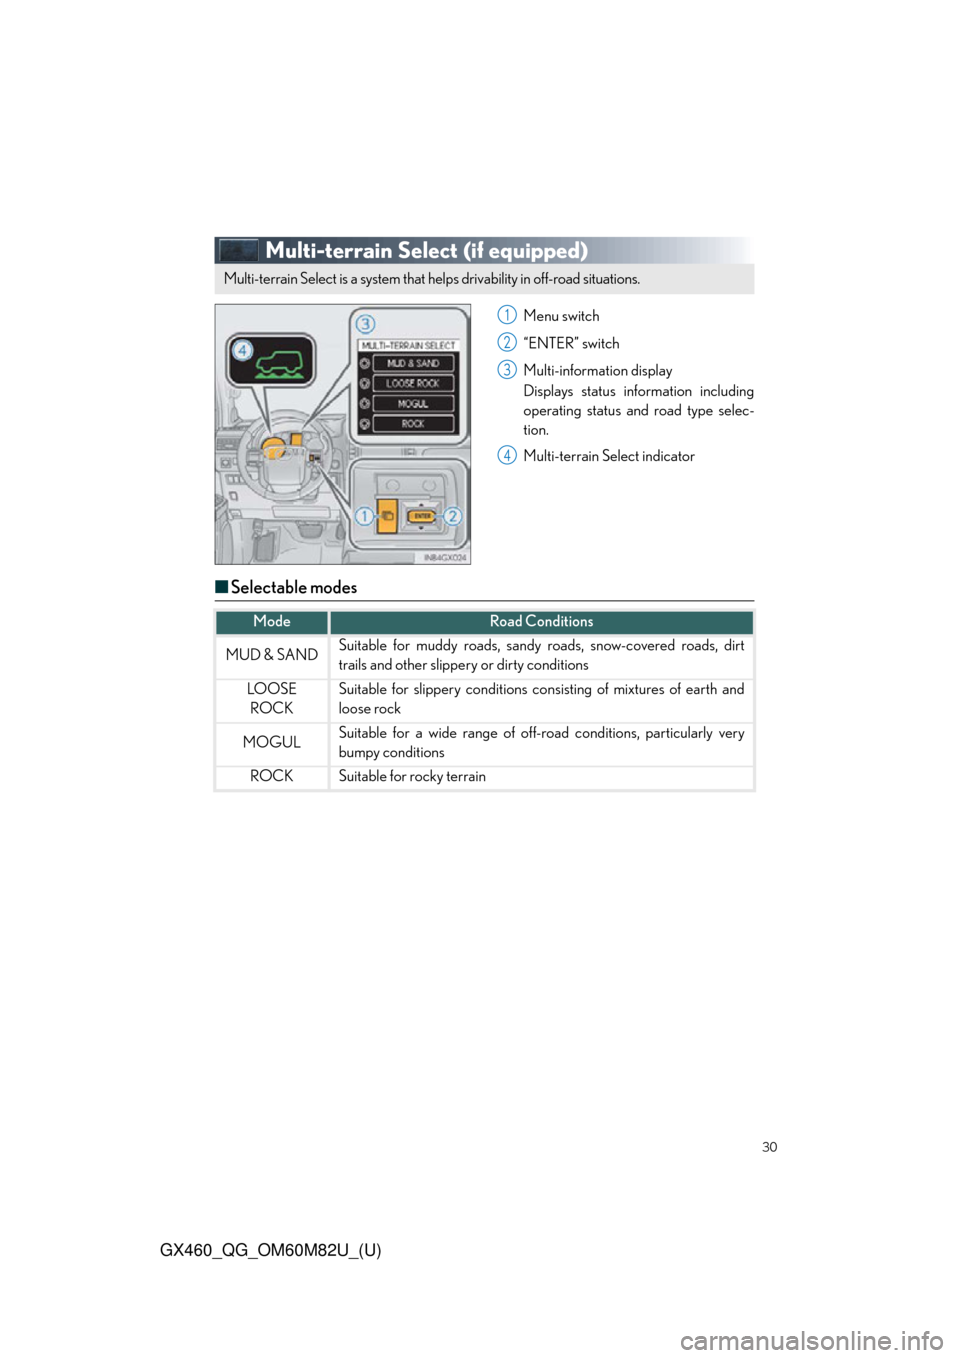 Lexus GX460 2016  Multimedia Manual / 30
GX460_QG_OM60M82U_(U)
Multi-terrain Select (if equipped)
Menu switch
“ENTER” switch
Multi-information display
Displays status information including
operating status and road type selec-
tion.
M